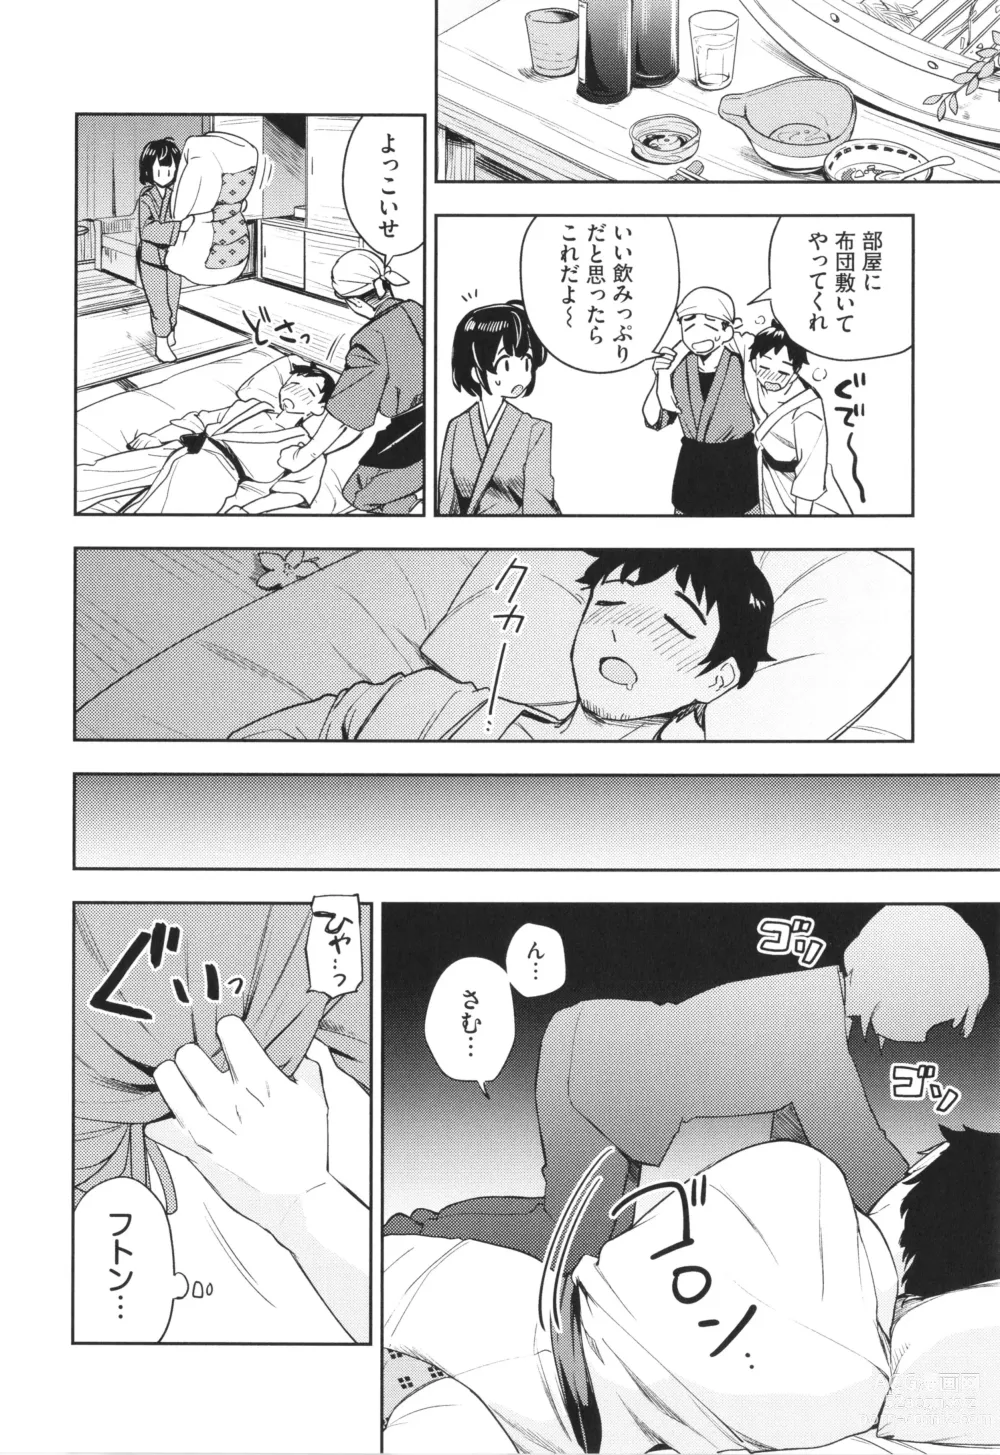 Page 7 of manga Secret Time